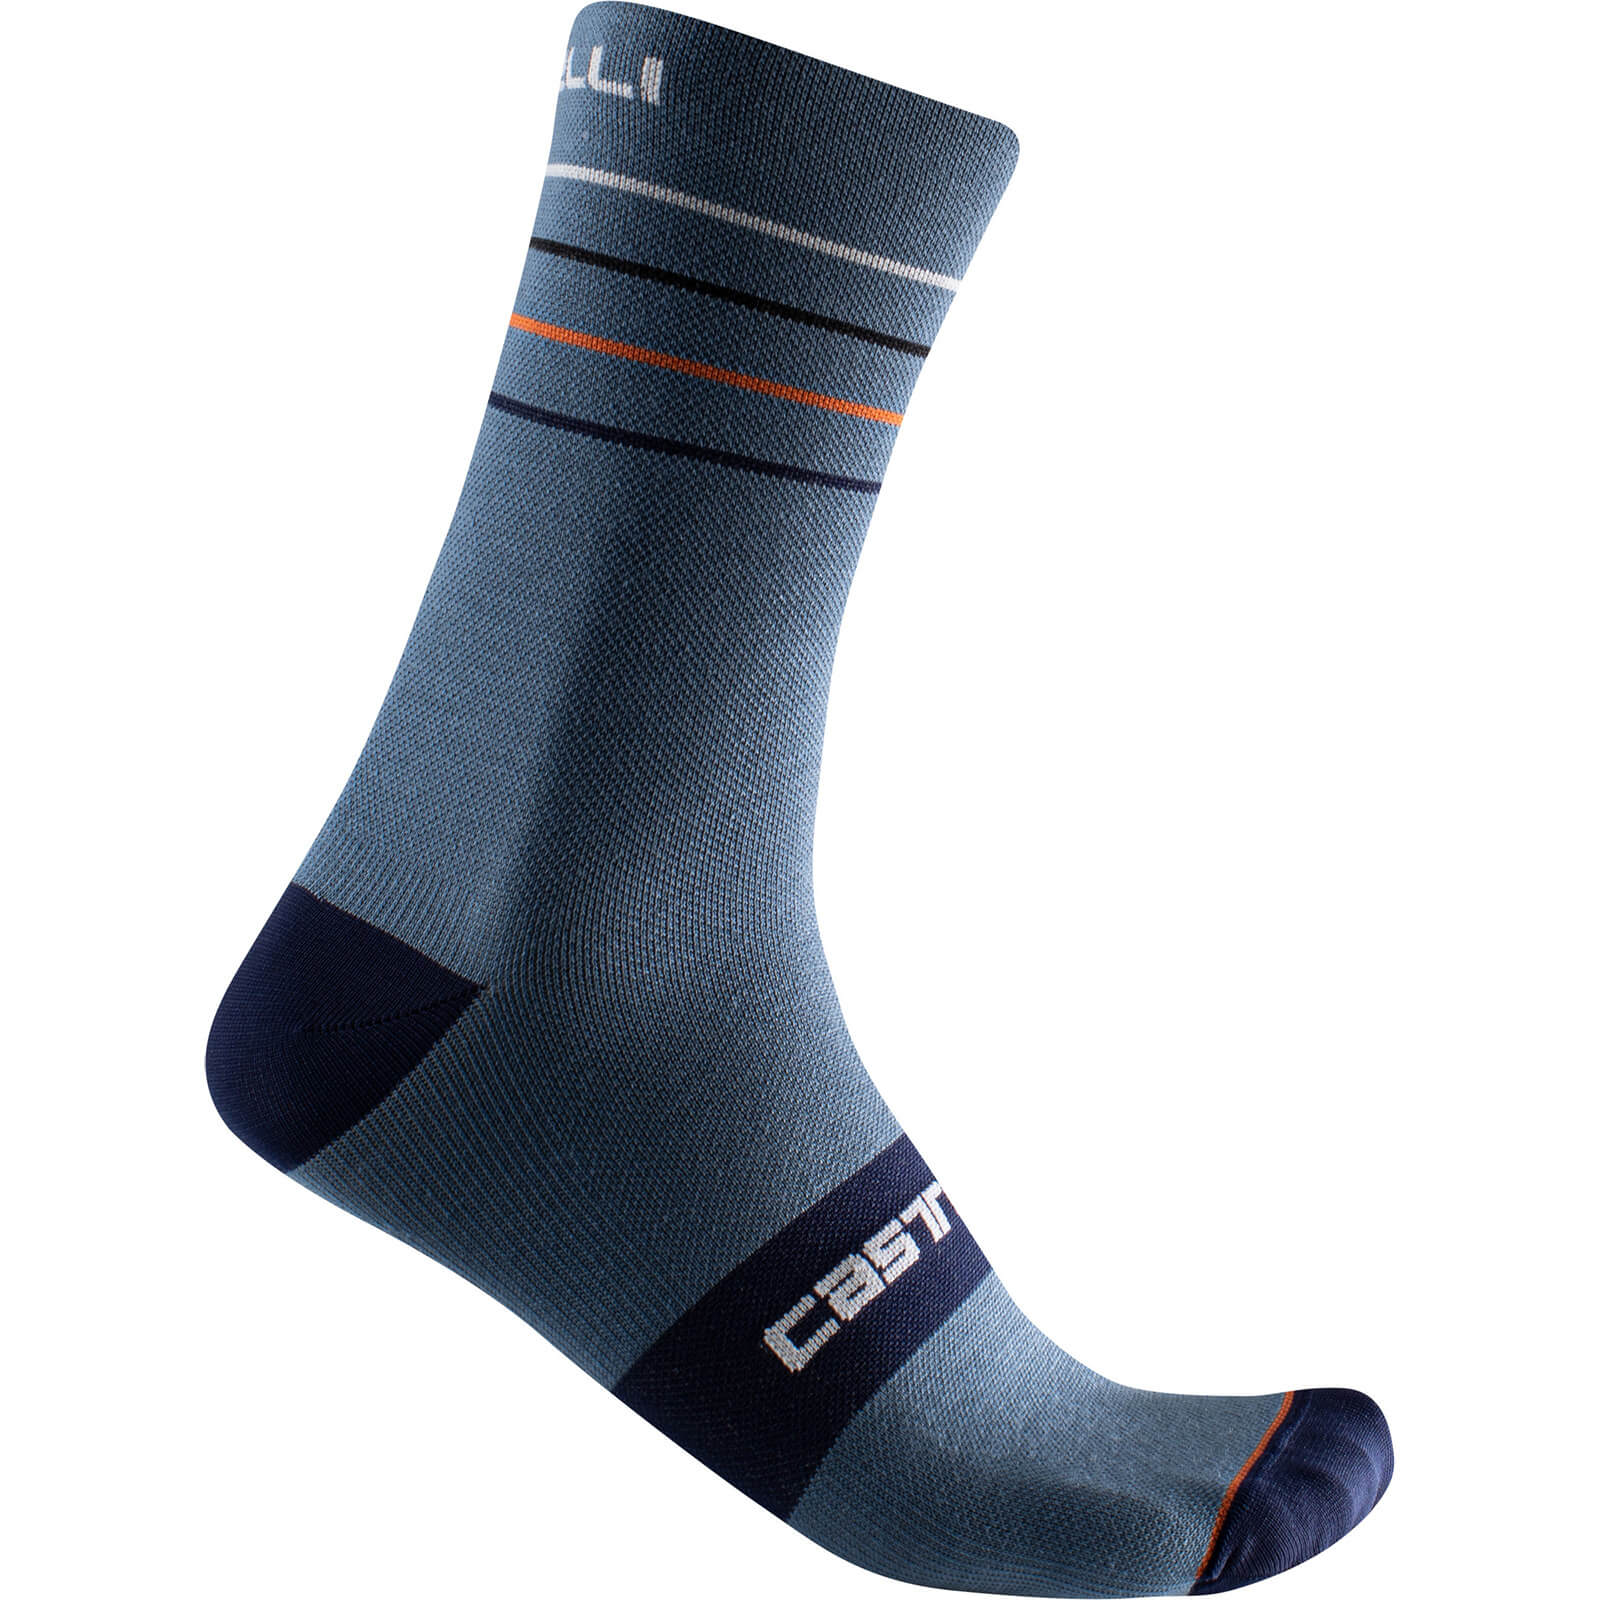 Castelli Endurance 15 Socks - L/XL - Light Steel Blue/Pop Orange/White